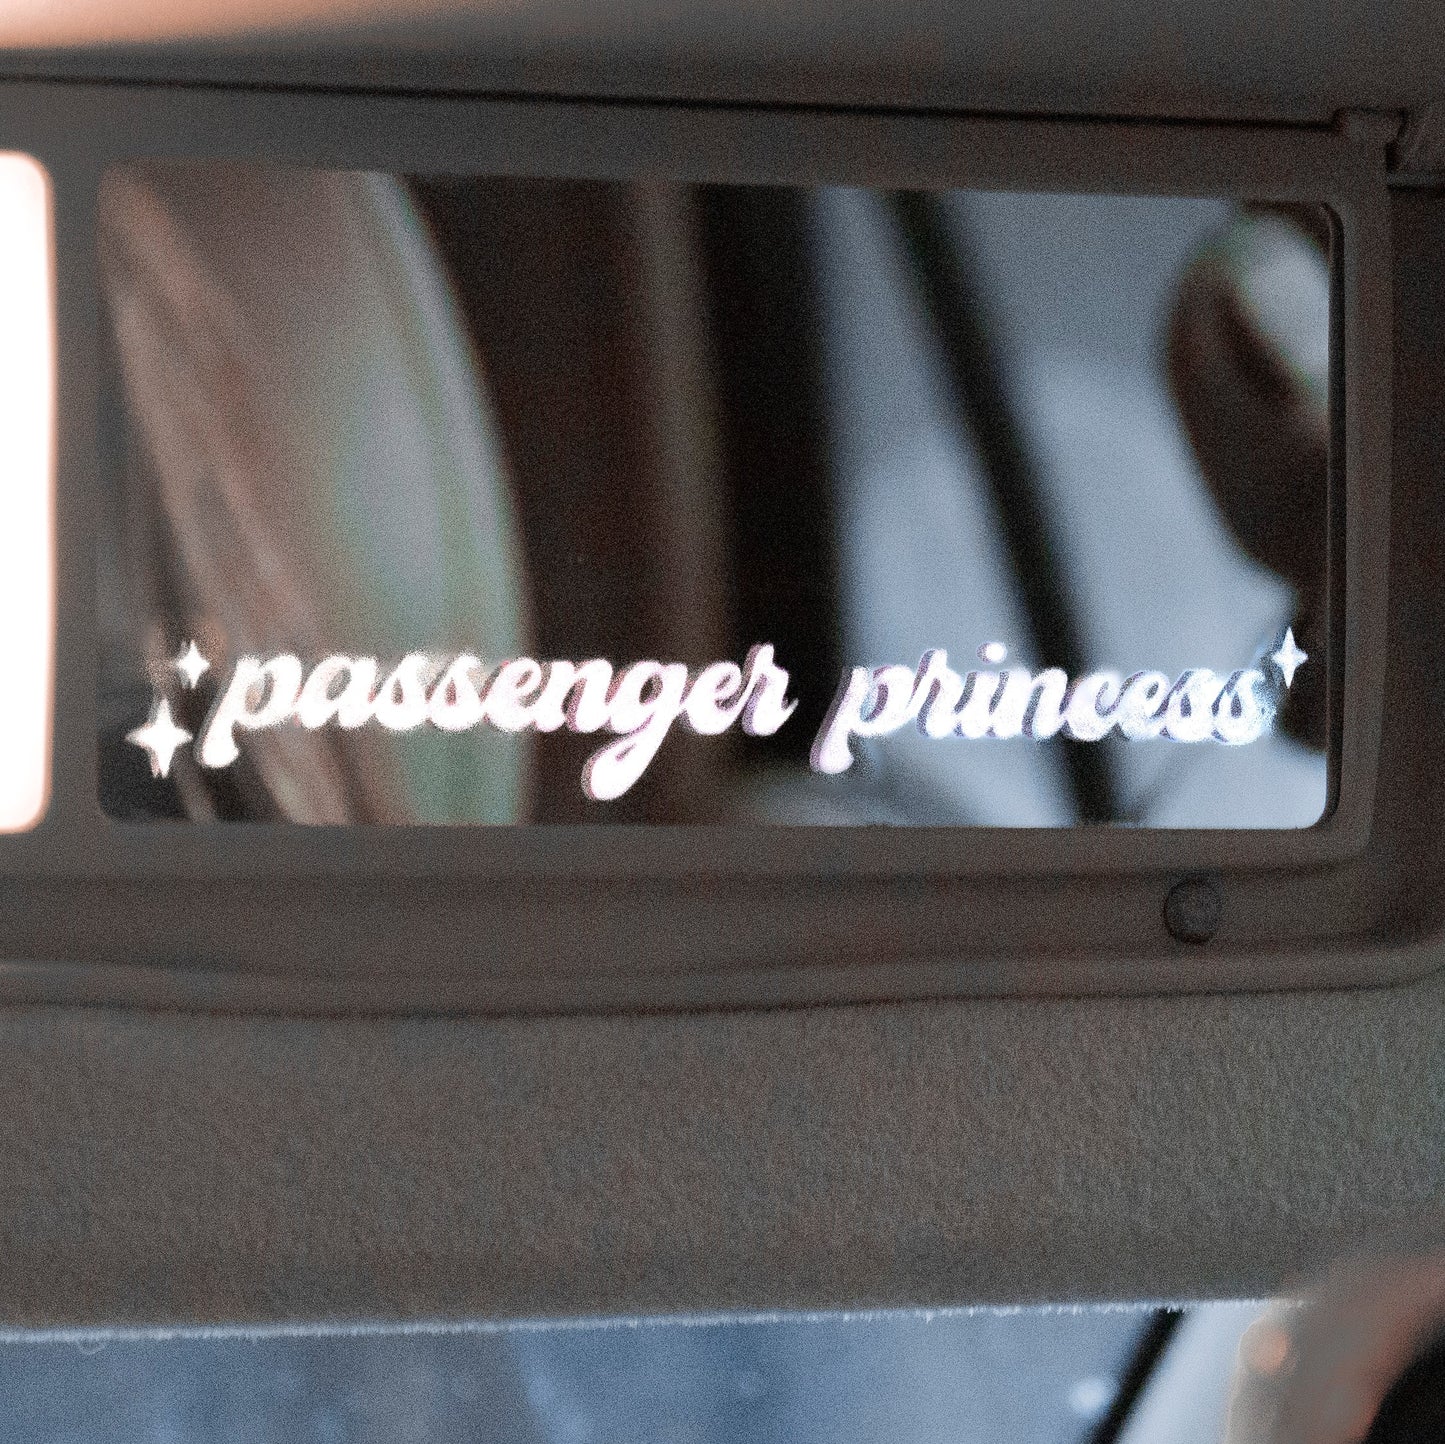 passenger princess - Passenger Princess - Sticker